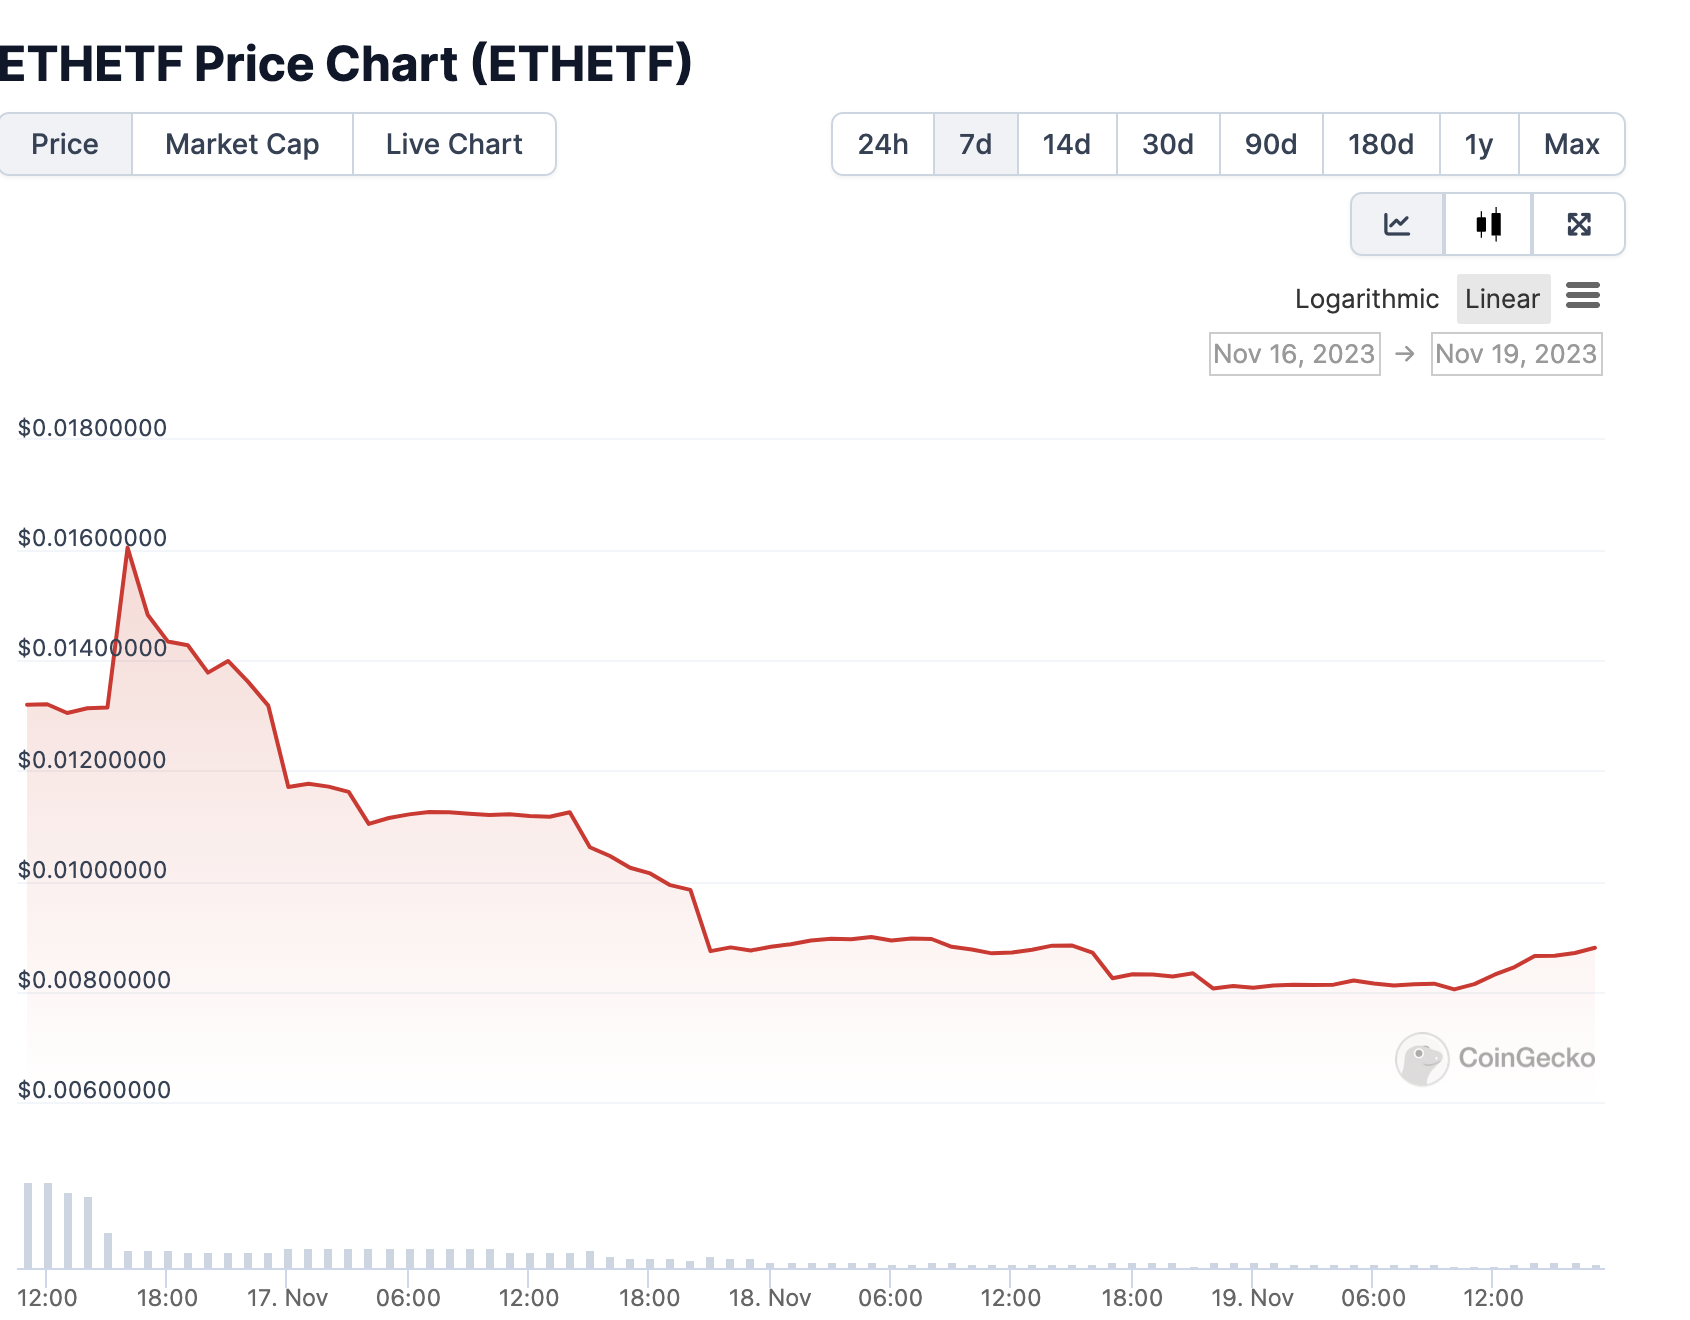 ETHETF Price Dynamics Since its Launch. Source: Сoingecko